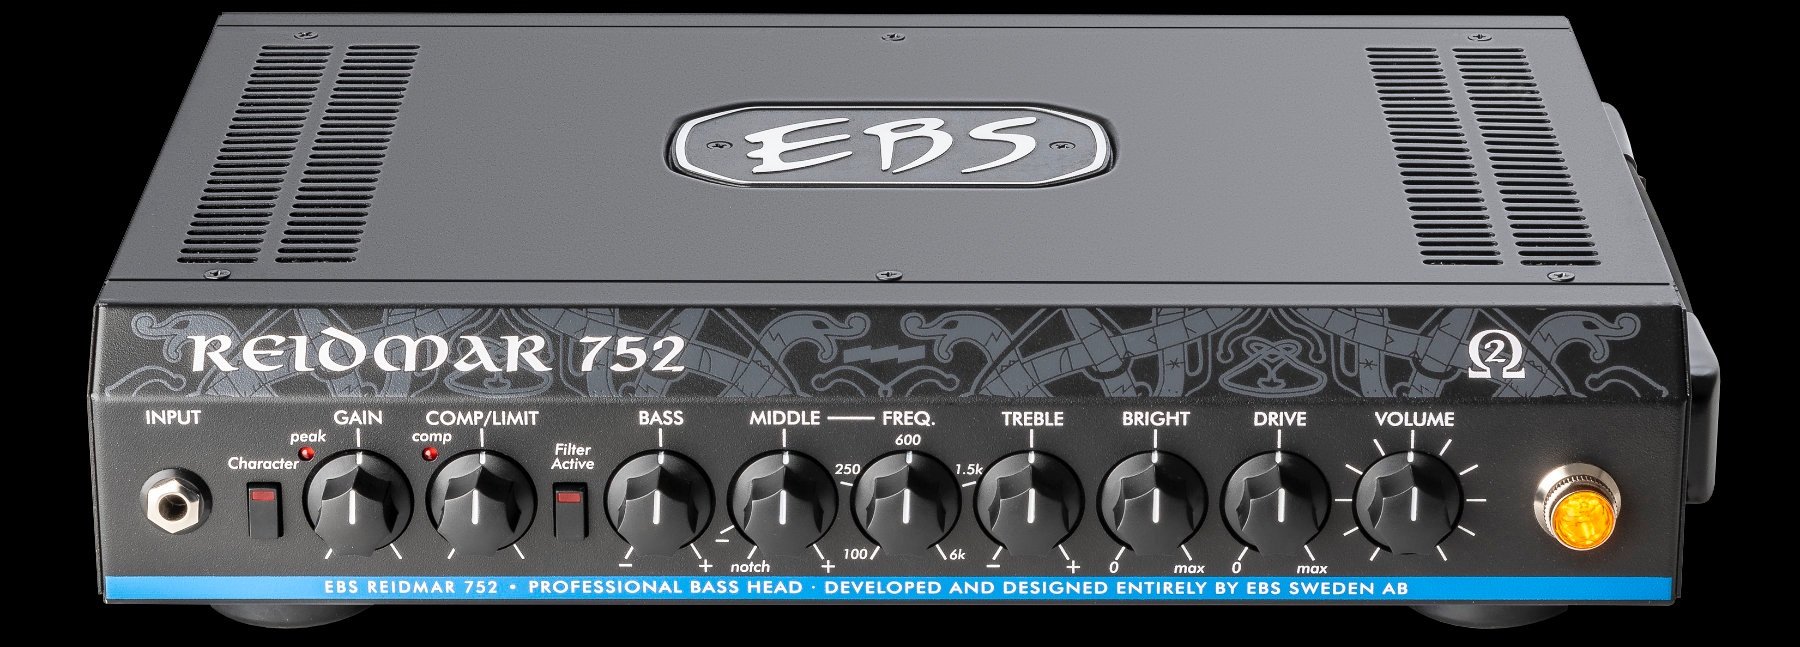 EBS presents the EBS Reidmar 752 bass amplifier - Pressmeddelanden